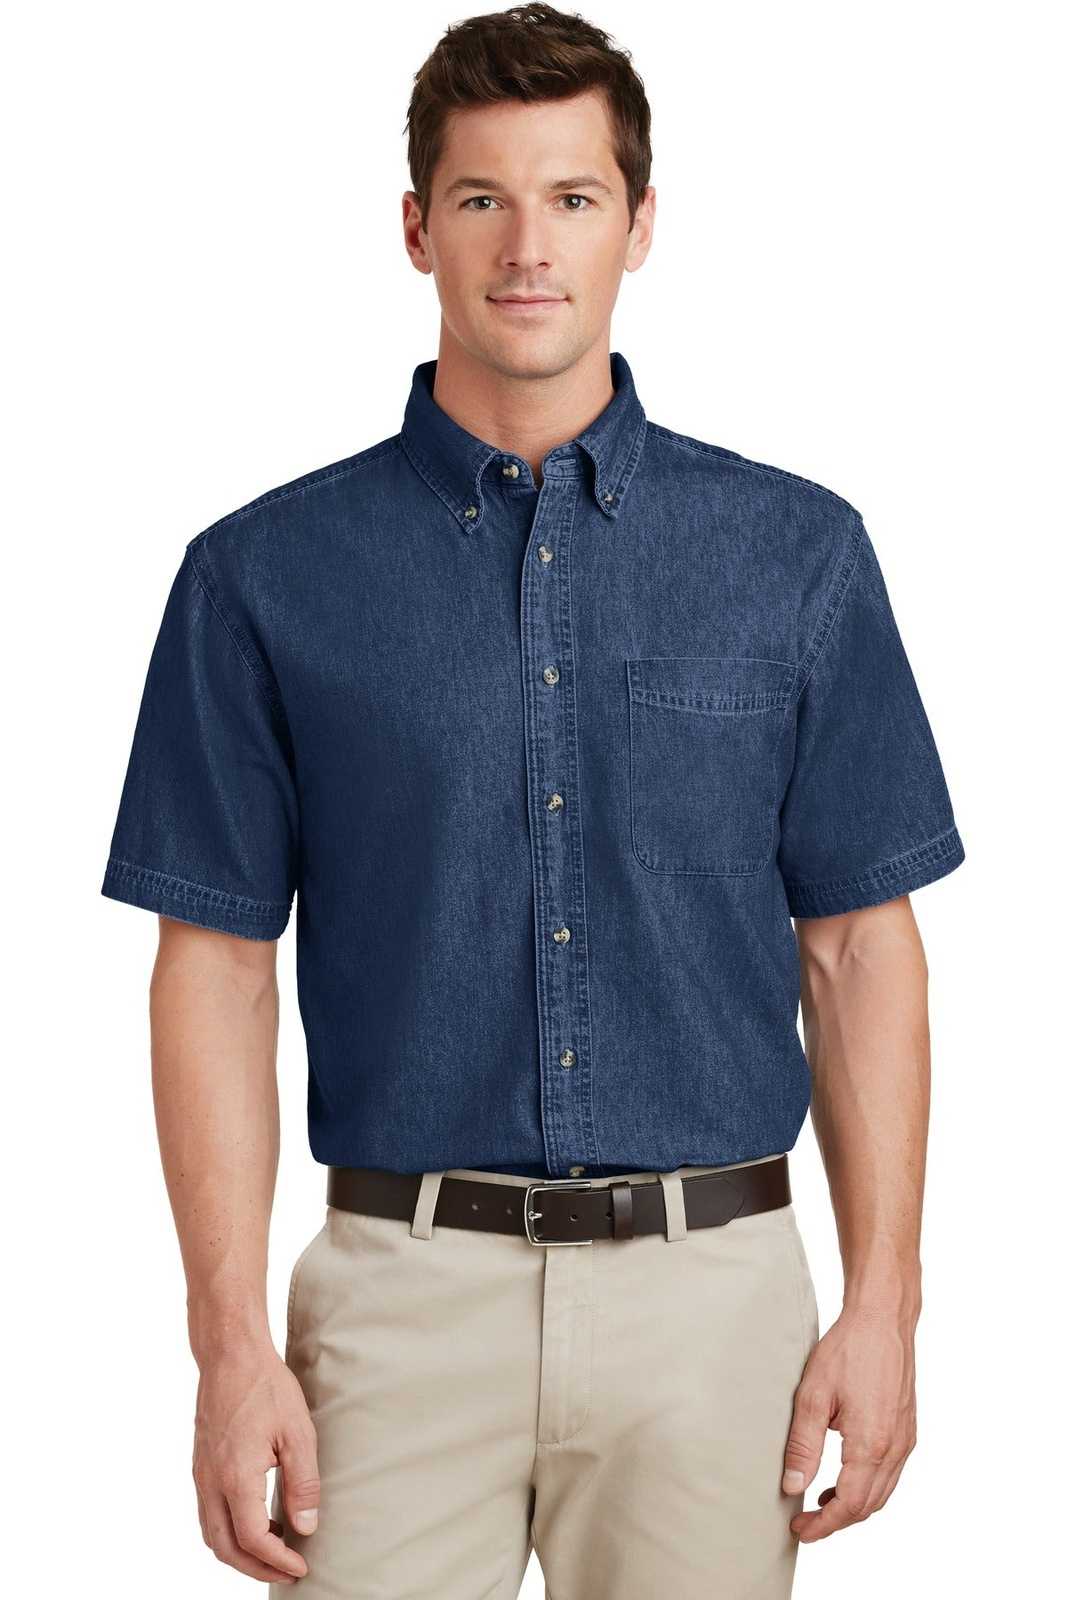 Port & Company SP11 Short Sleeve Value Denim Shirt - Ink Blue - HIT a Double - 1